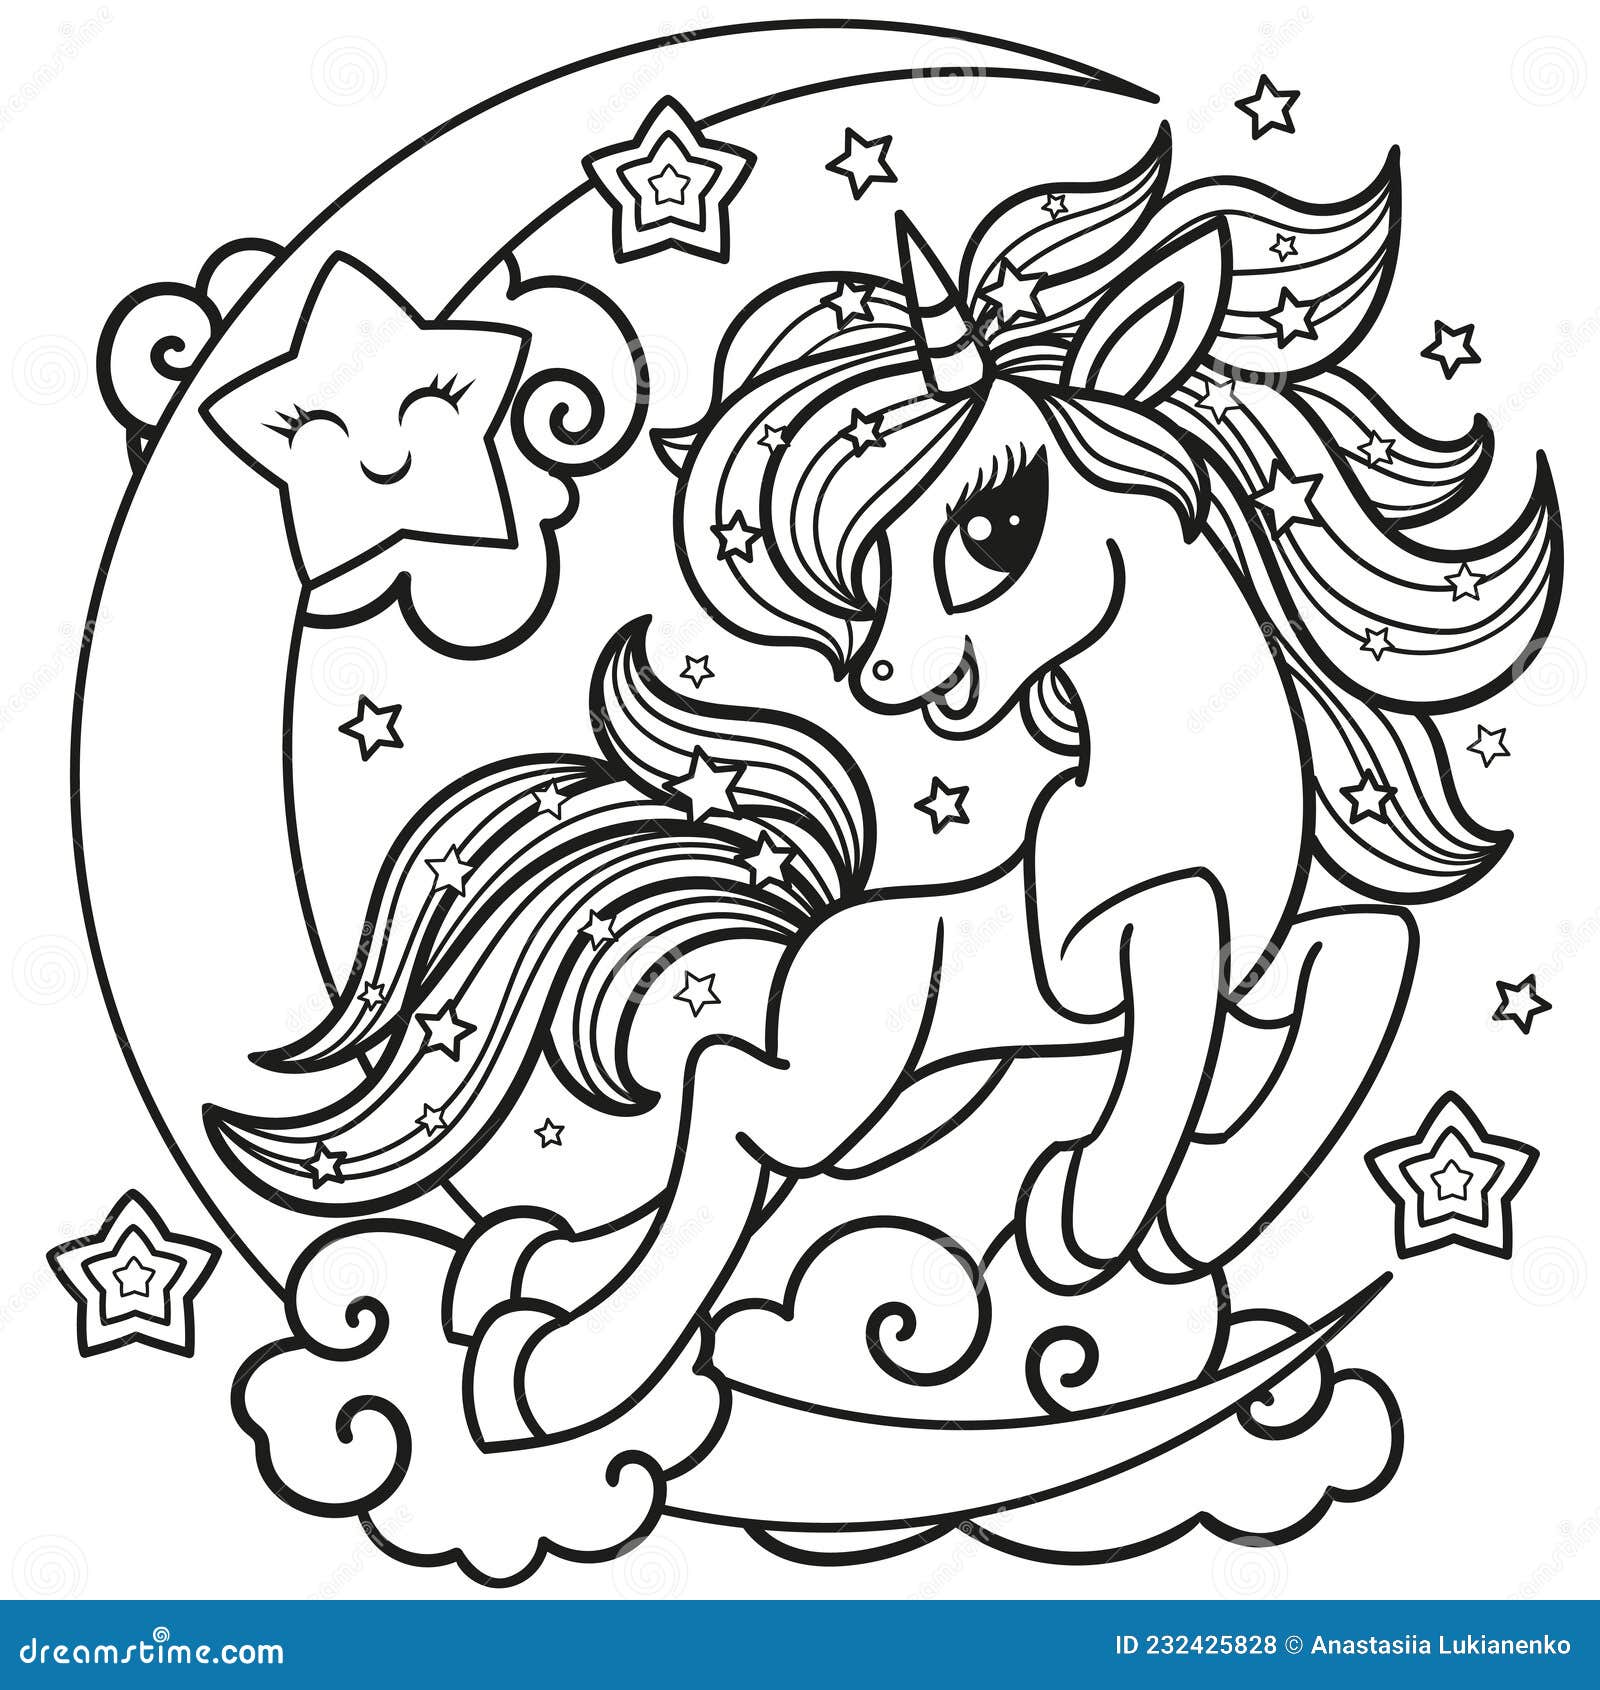 Cartoon, Cute Unicorn. Black and White Linear Image. Vector. Stock ...